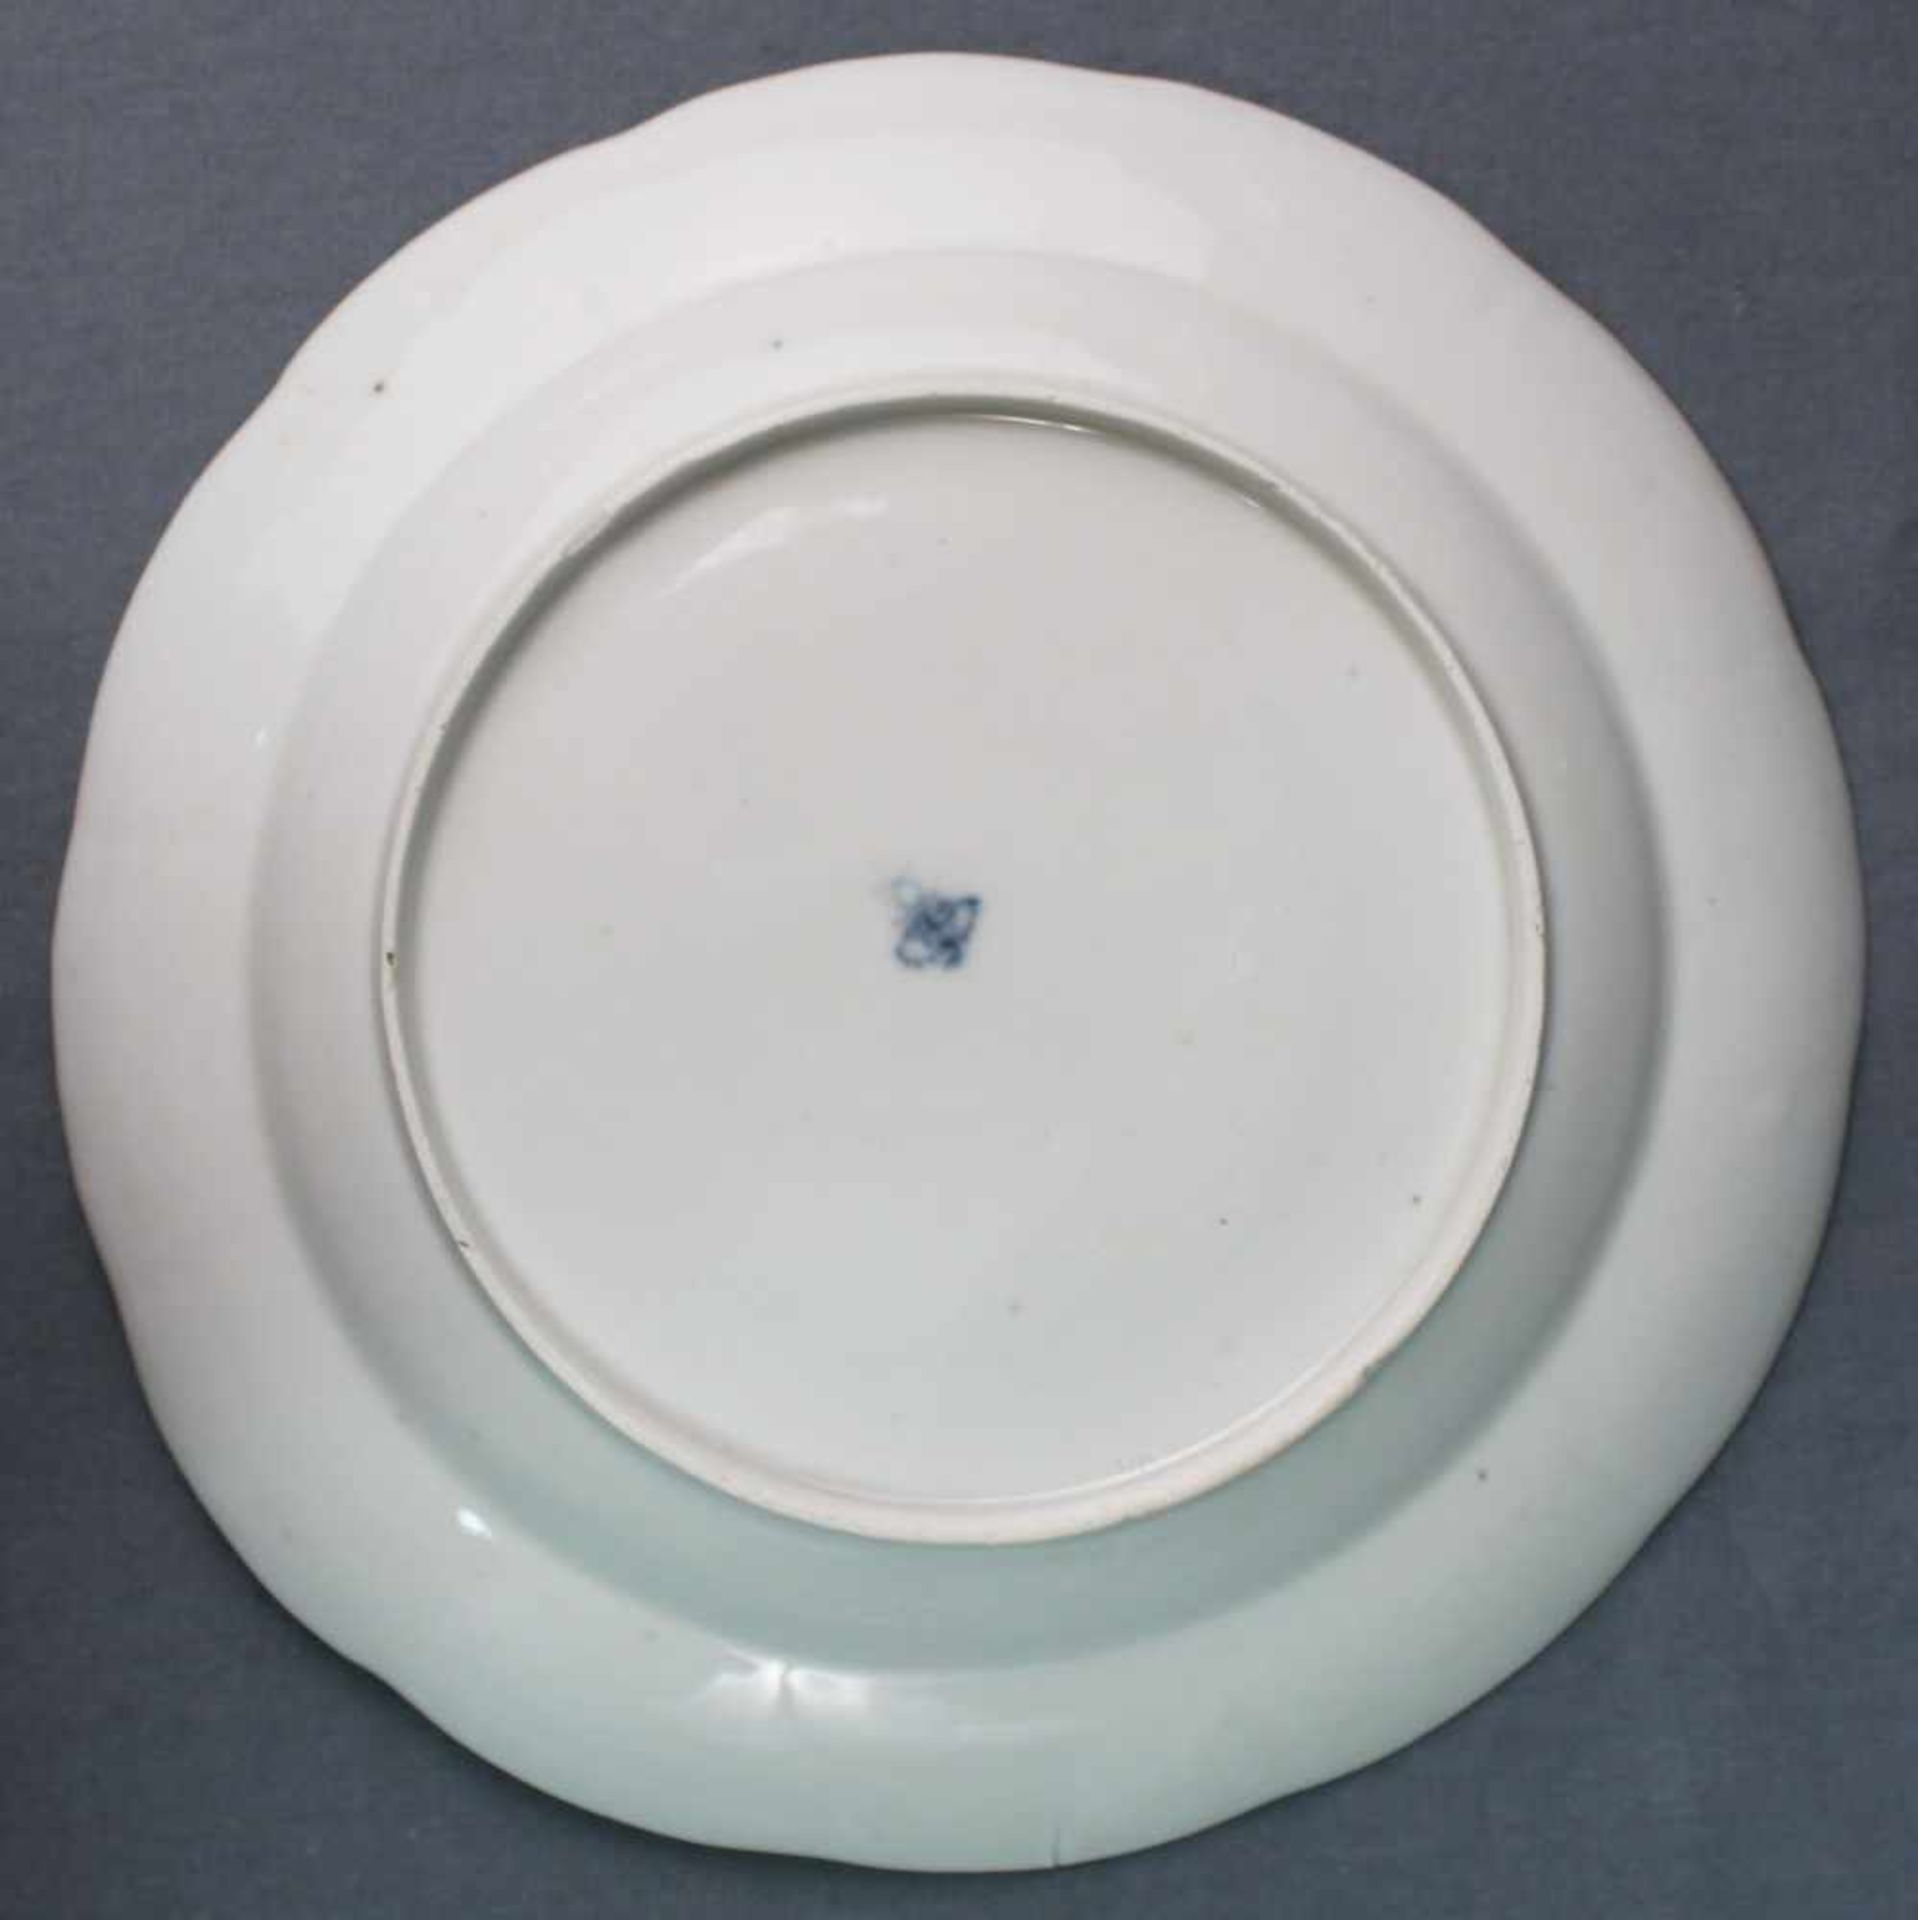 Plate Ludwigsburg porcelain. - Image 3 of 4